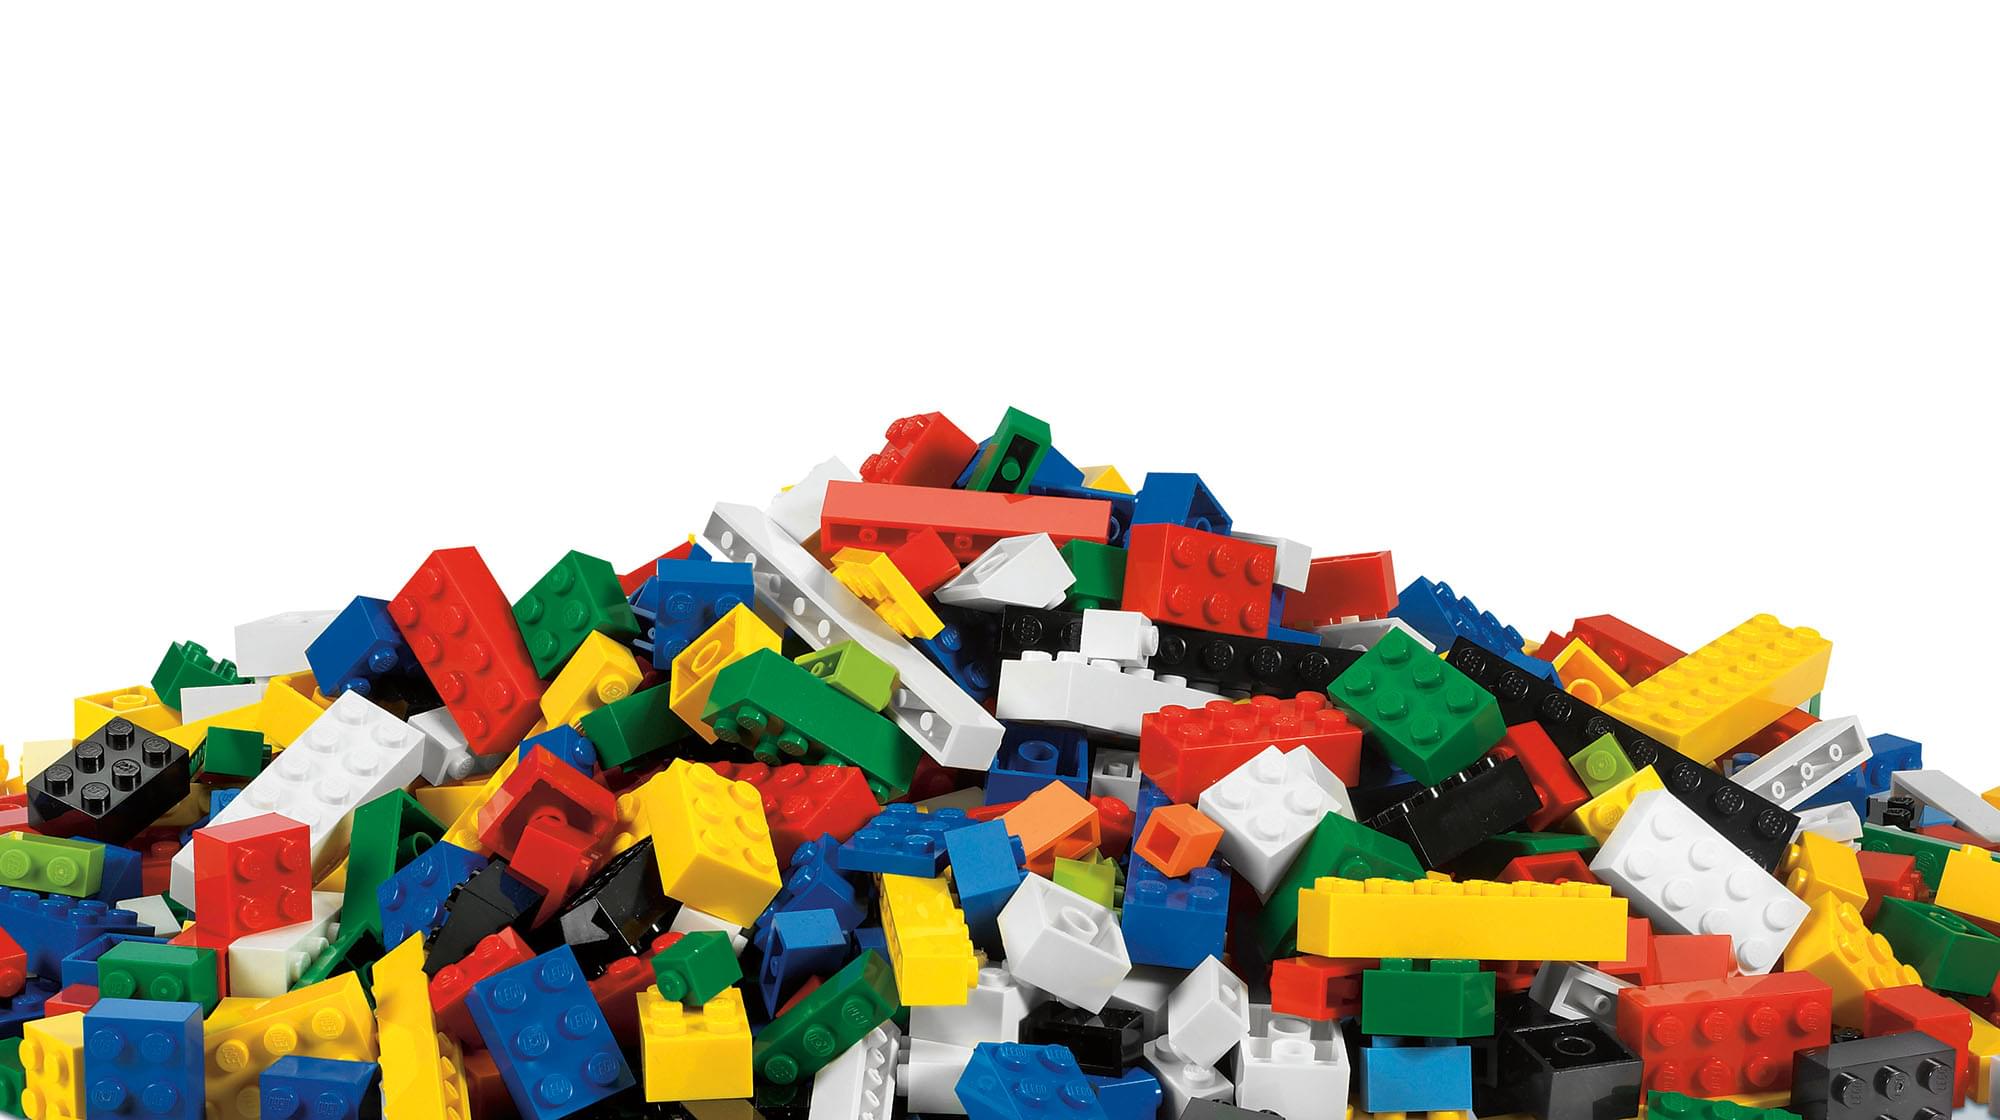 A stack of lego bricks